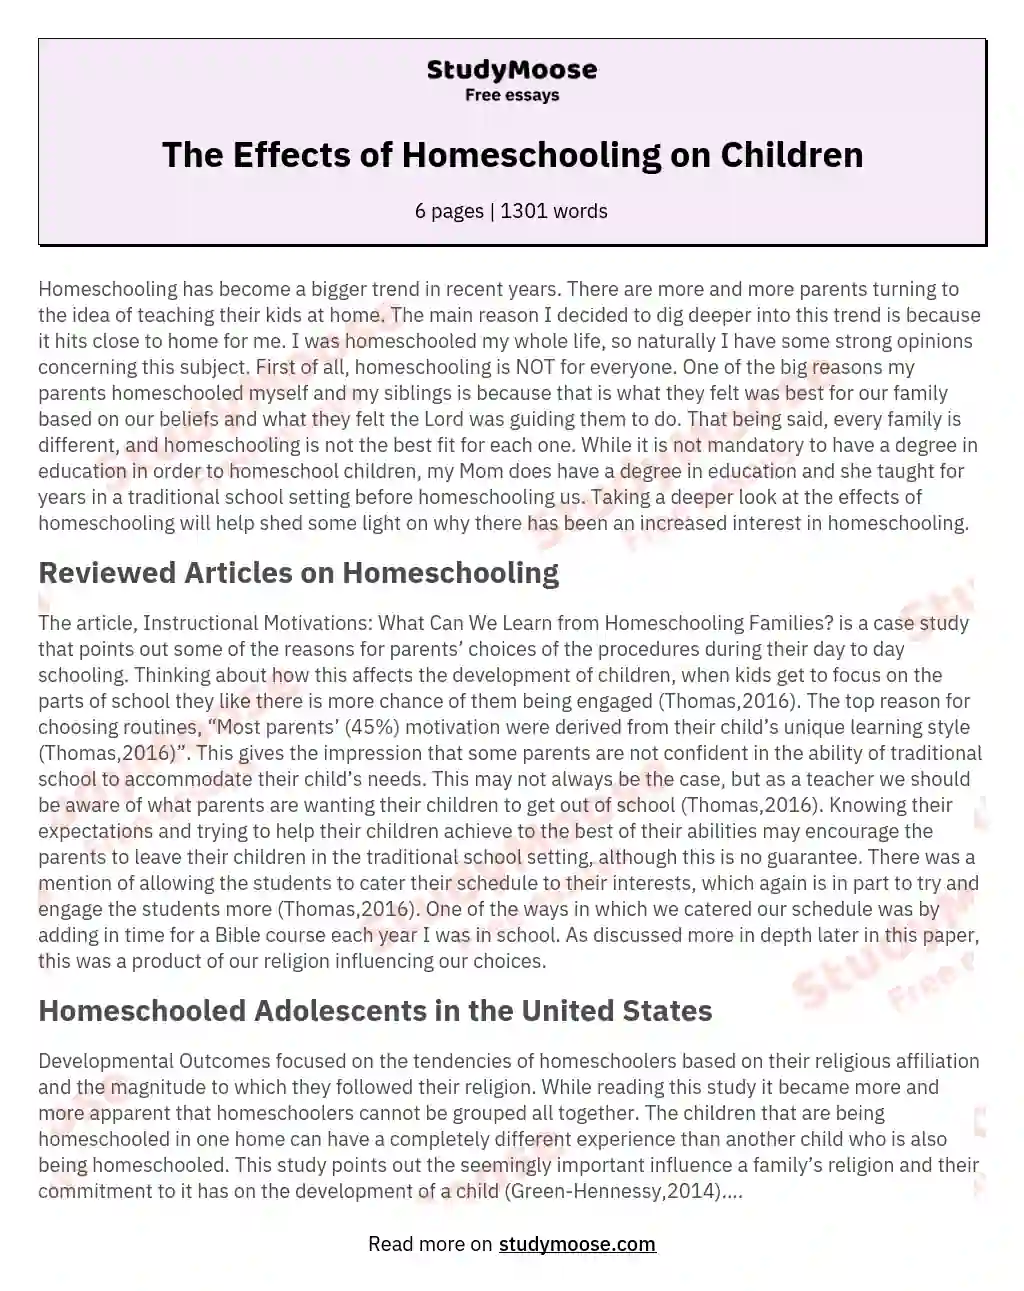 homeschooling discursive essay